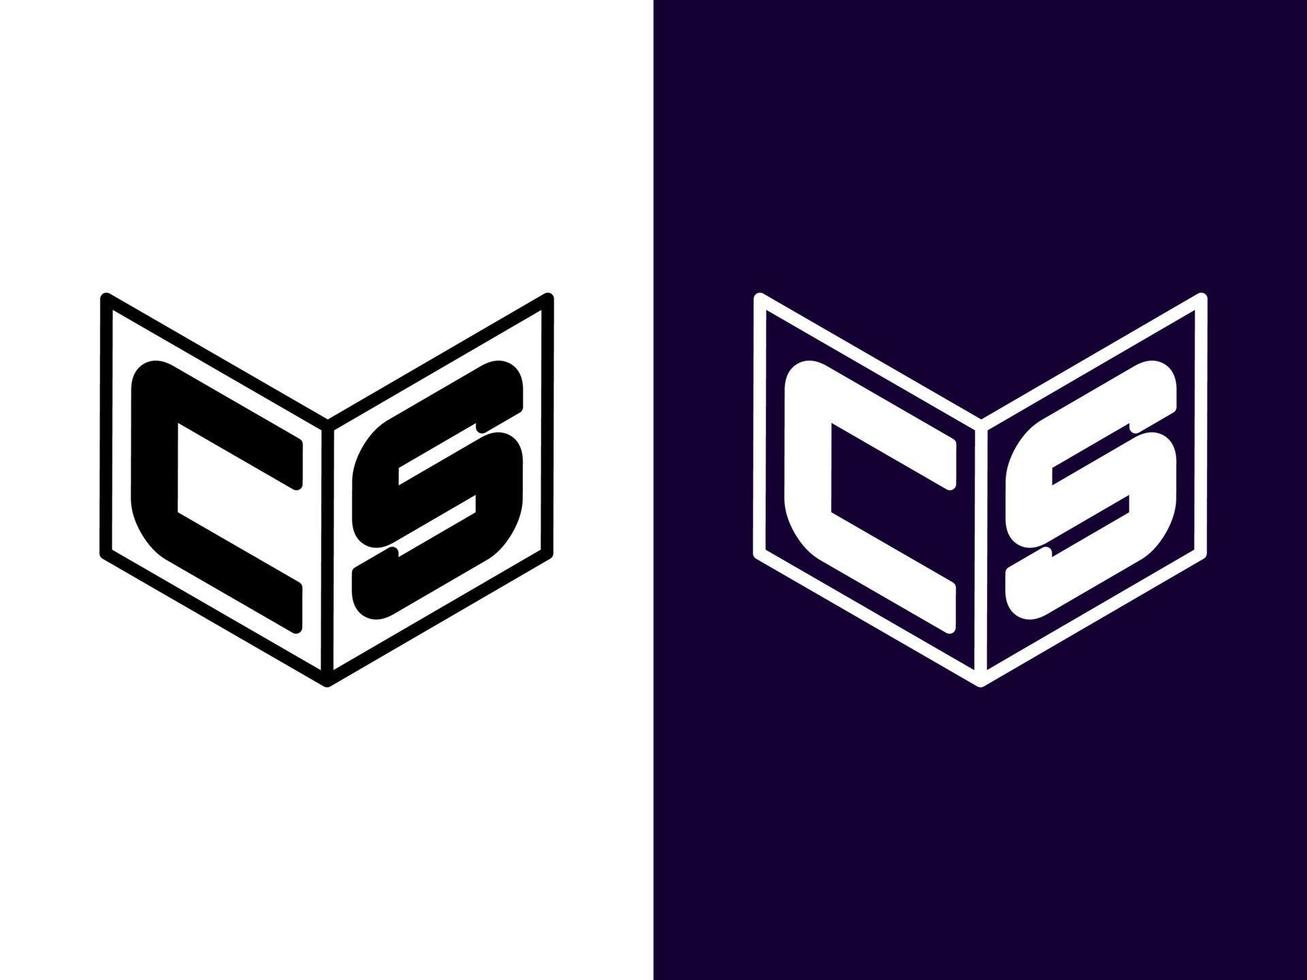 Initial letter CS minimalist and modern 3D logo design vector